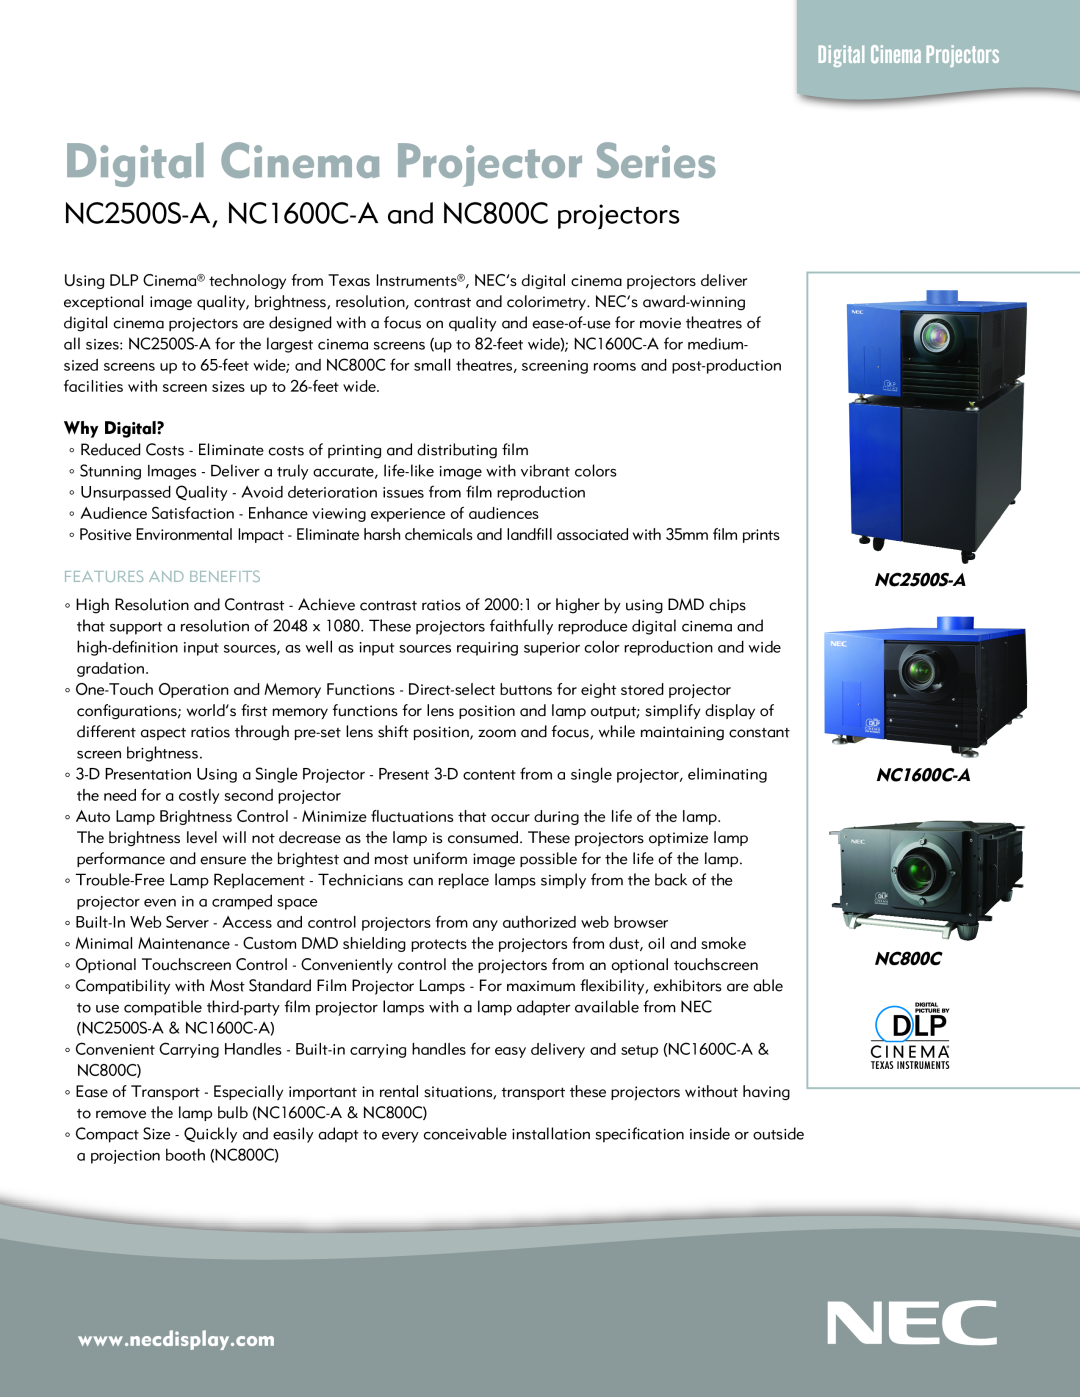 NEC manual Digital Cinema Projector Series, NC2500S-A, NC1600C-Aand NC800C projectors, Digital Cinema Projectors 